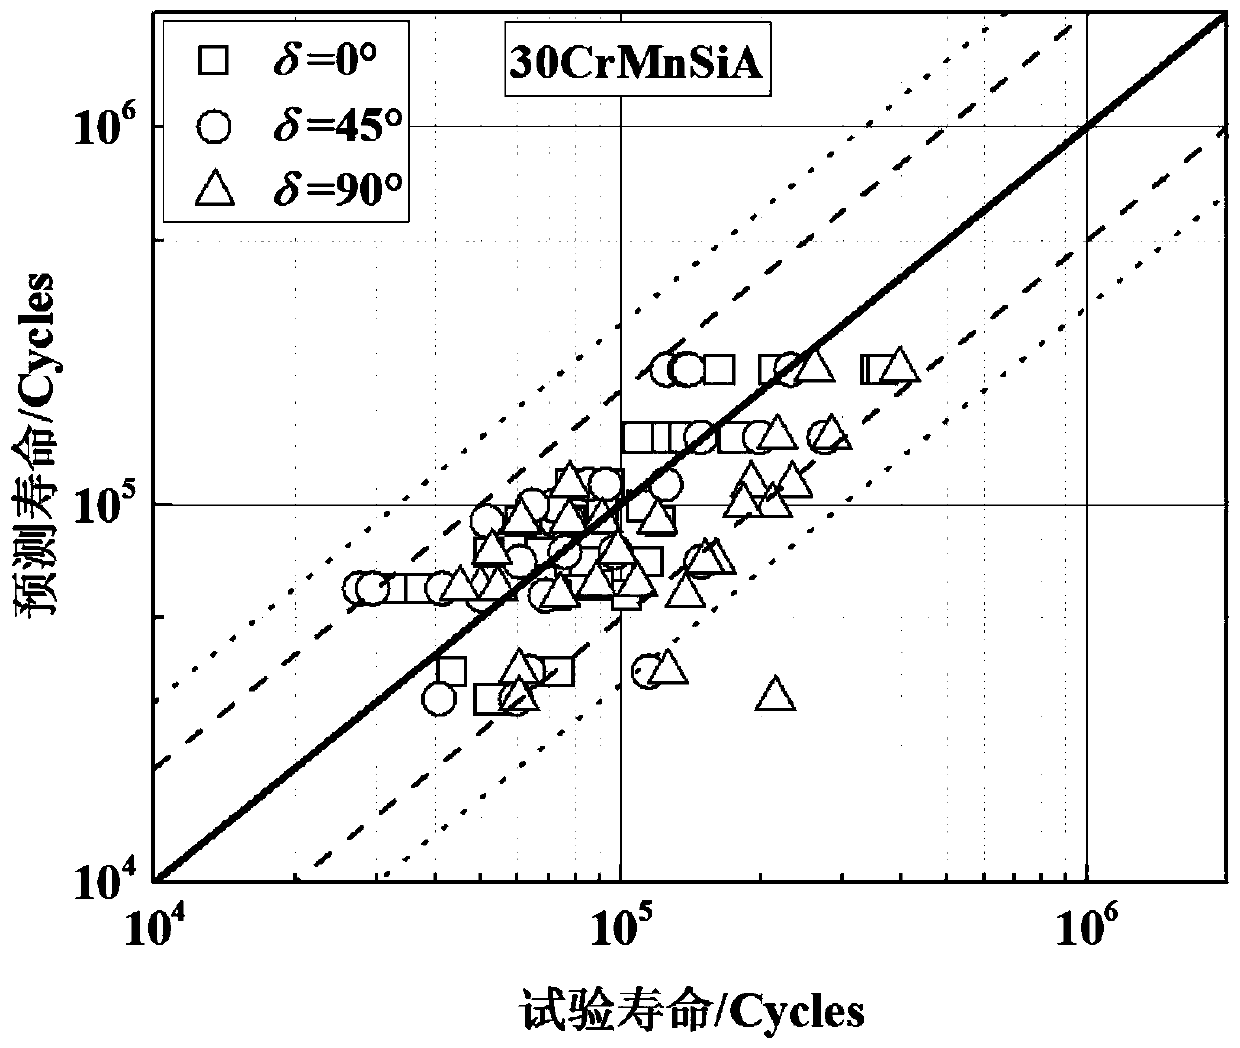 Uniaxial fatigue S-N curve-based hard metal material multi-axis high-cycle fatigue failure prediction method